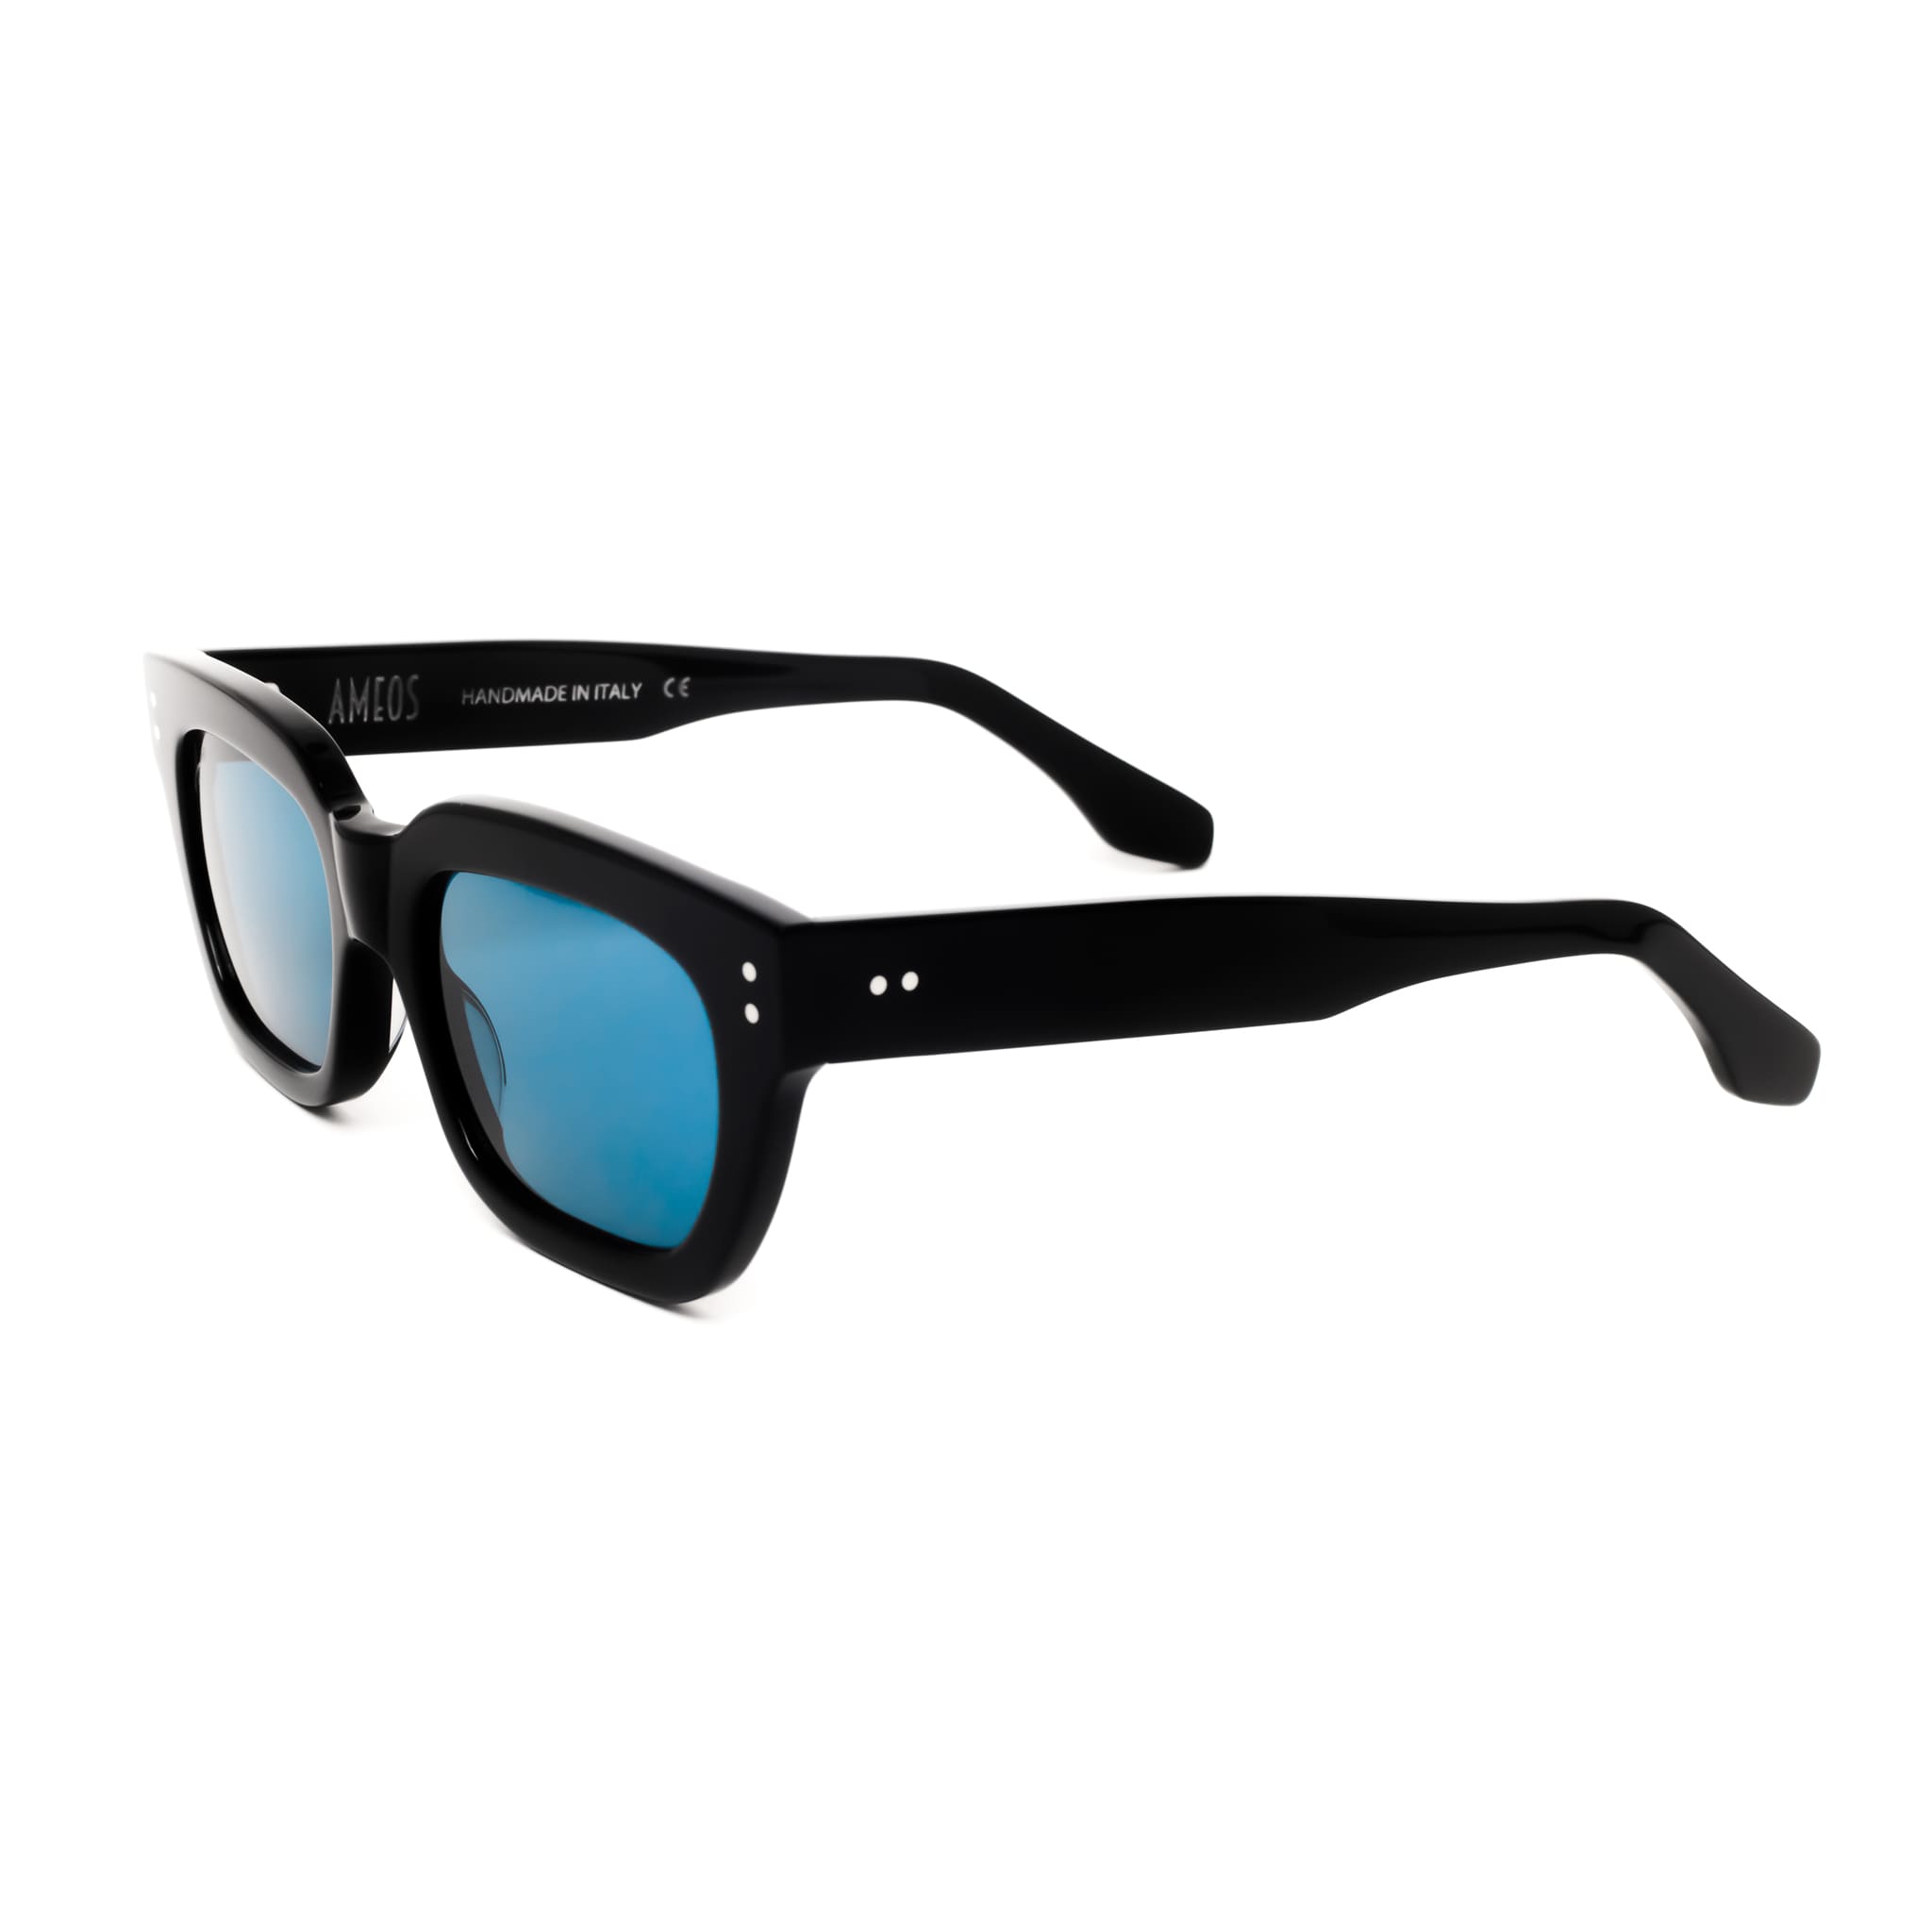 Ameos Forever collection Kai model. Black frames with dark blue lenses. Side view. Genderless, gender neutral eyewear